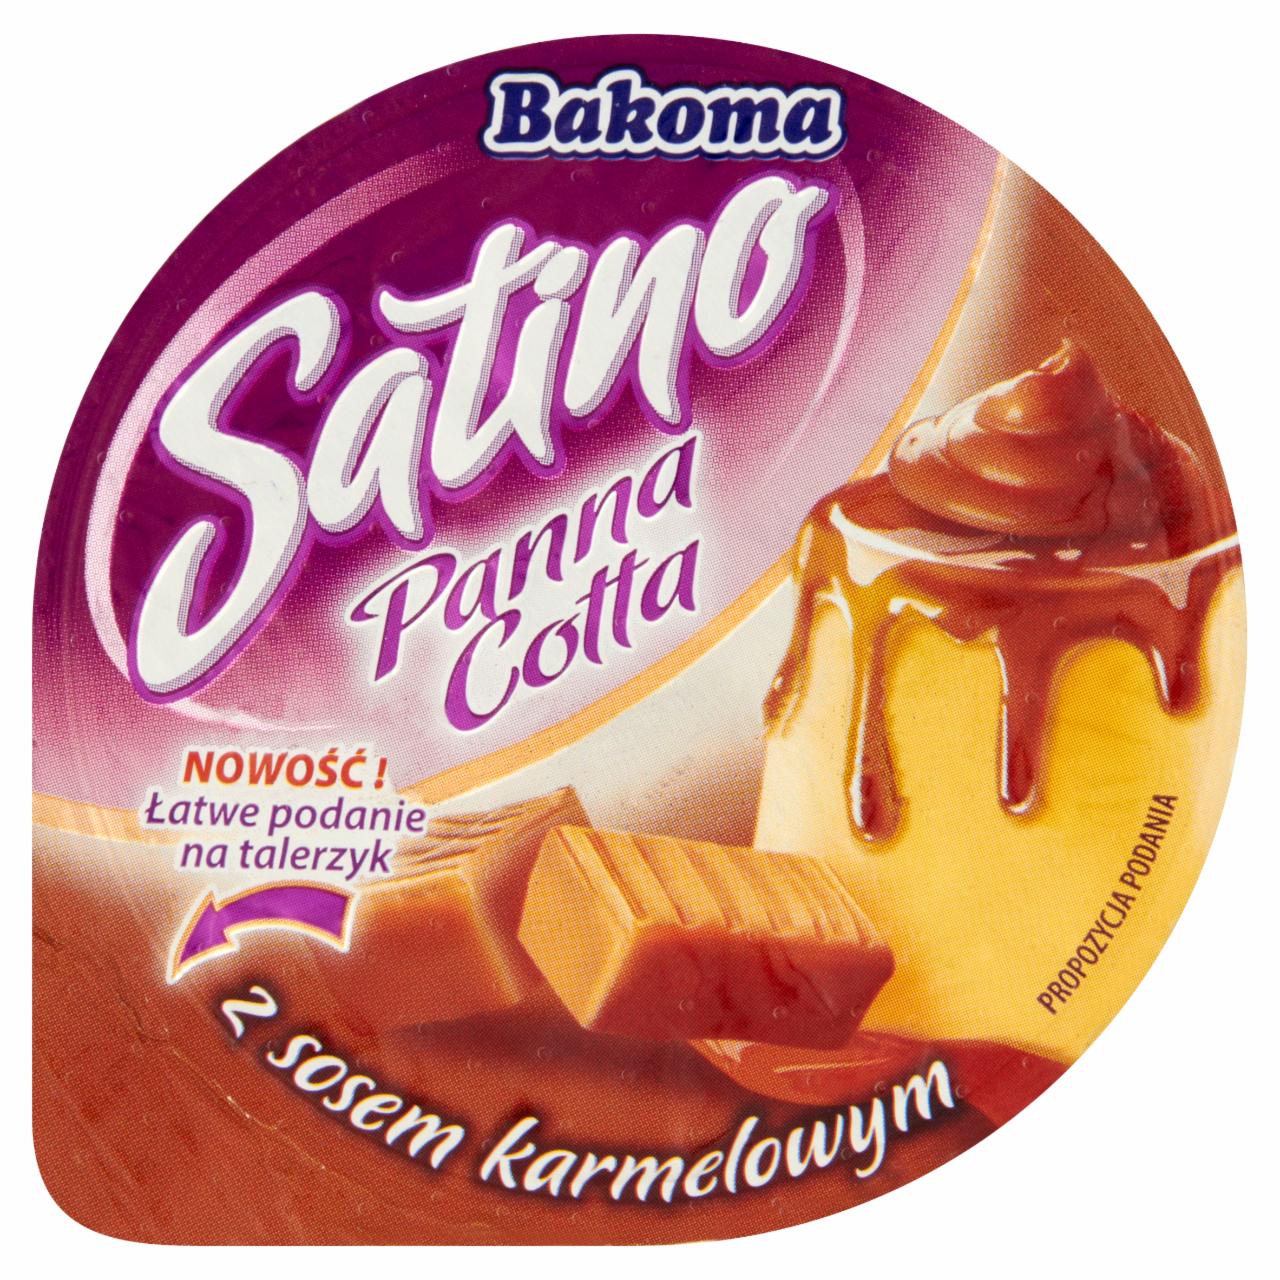 Zdjęcia - Bakoma Satino Panna Cotta z sosem karmelowym 140 g